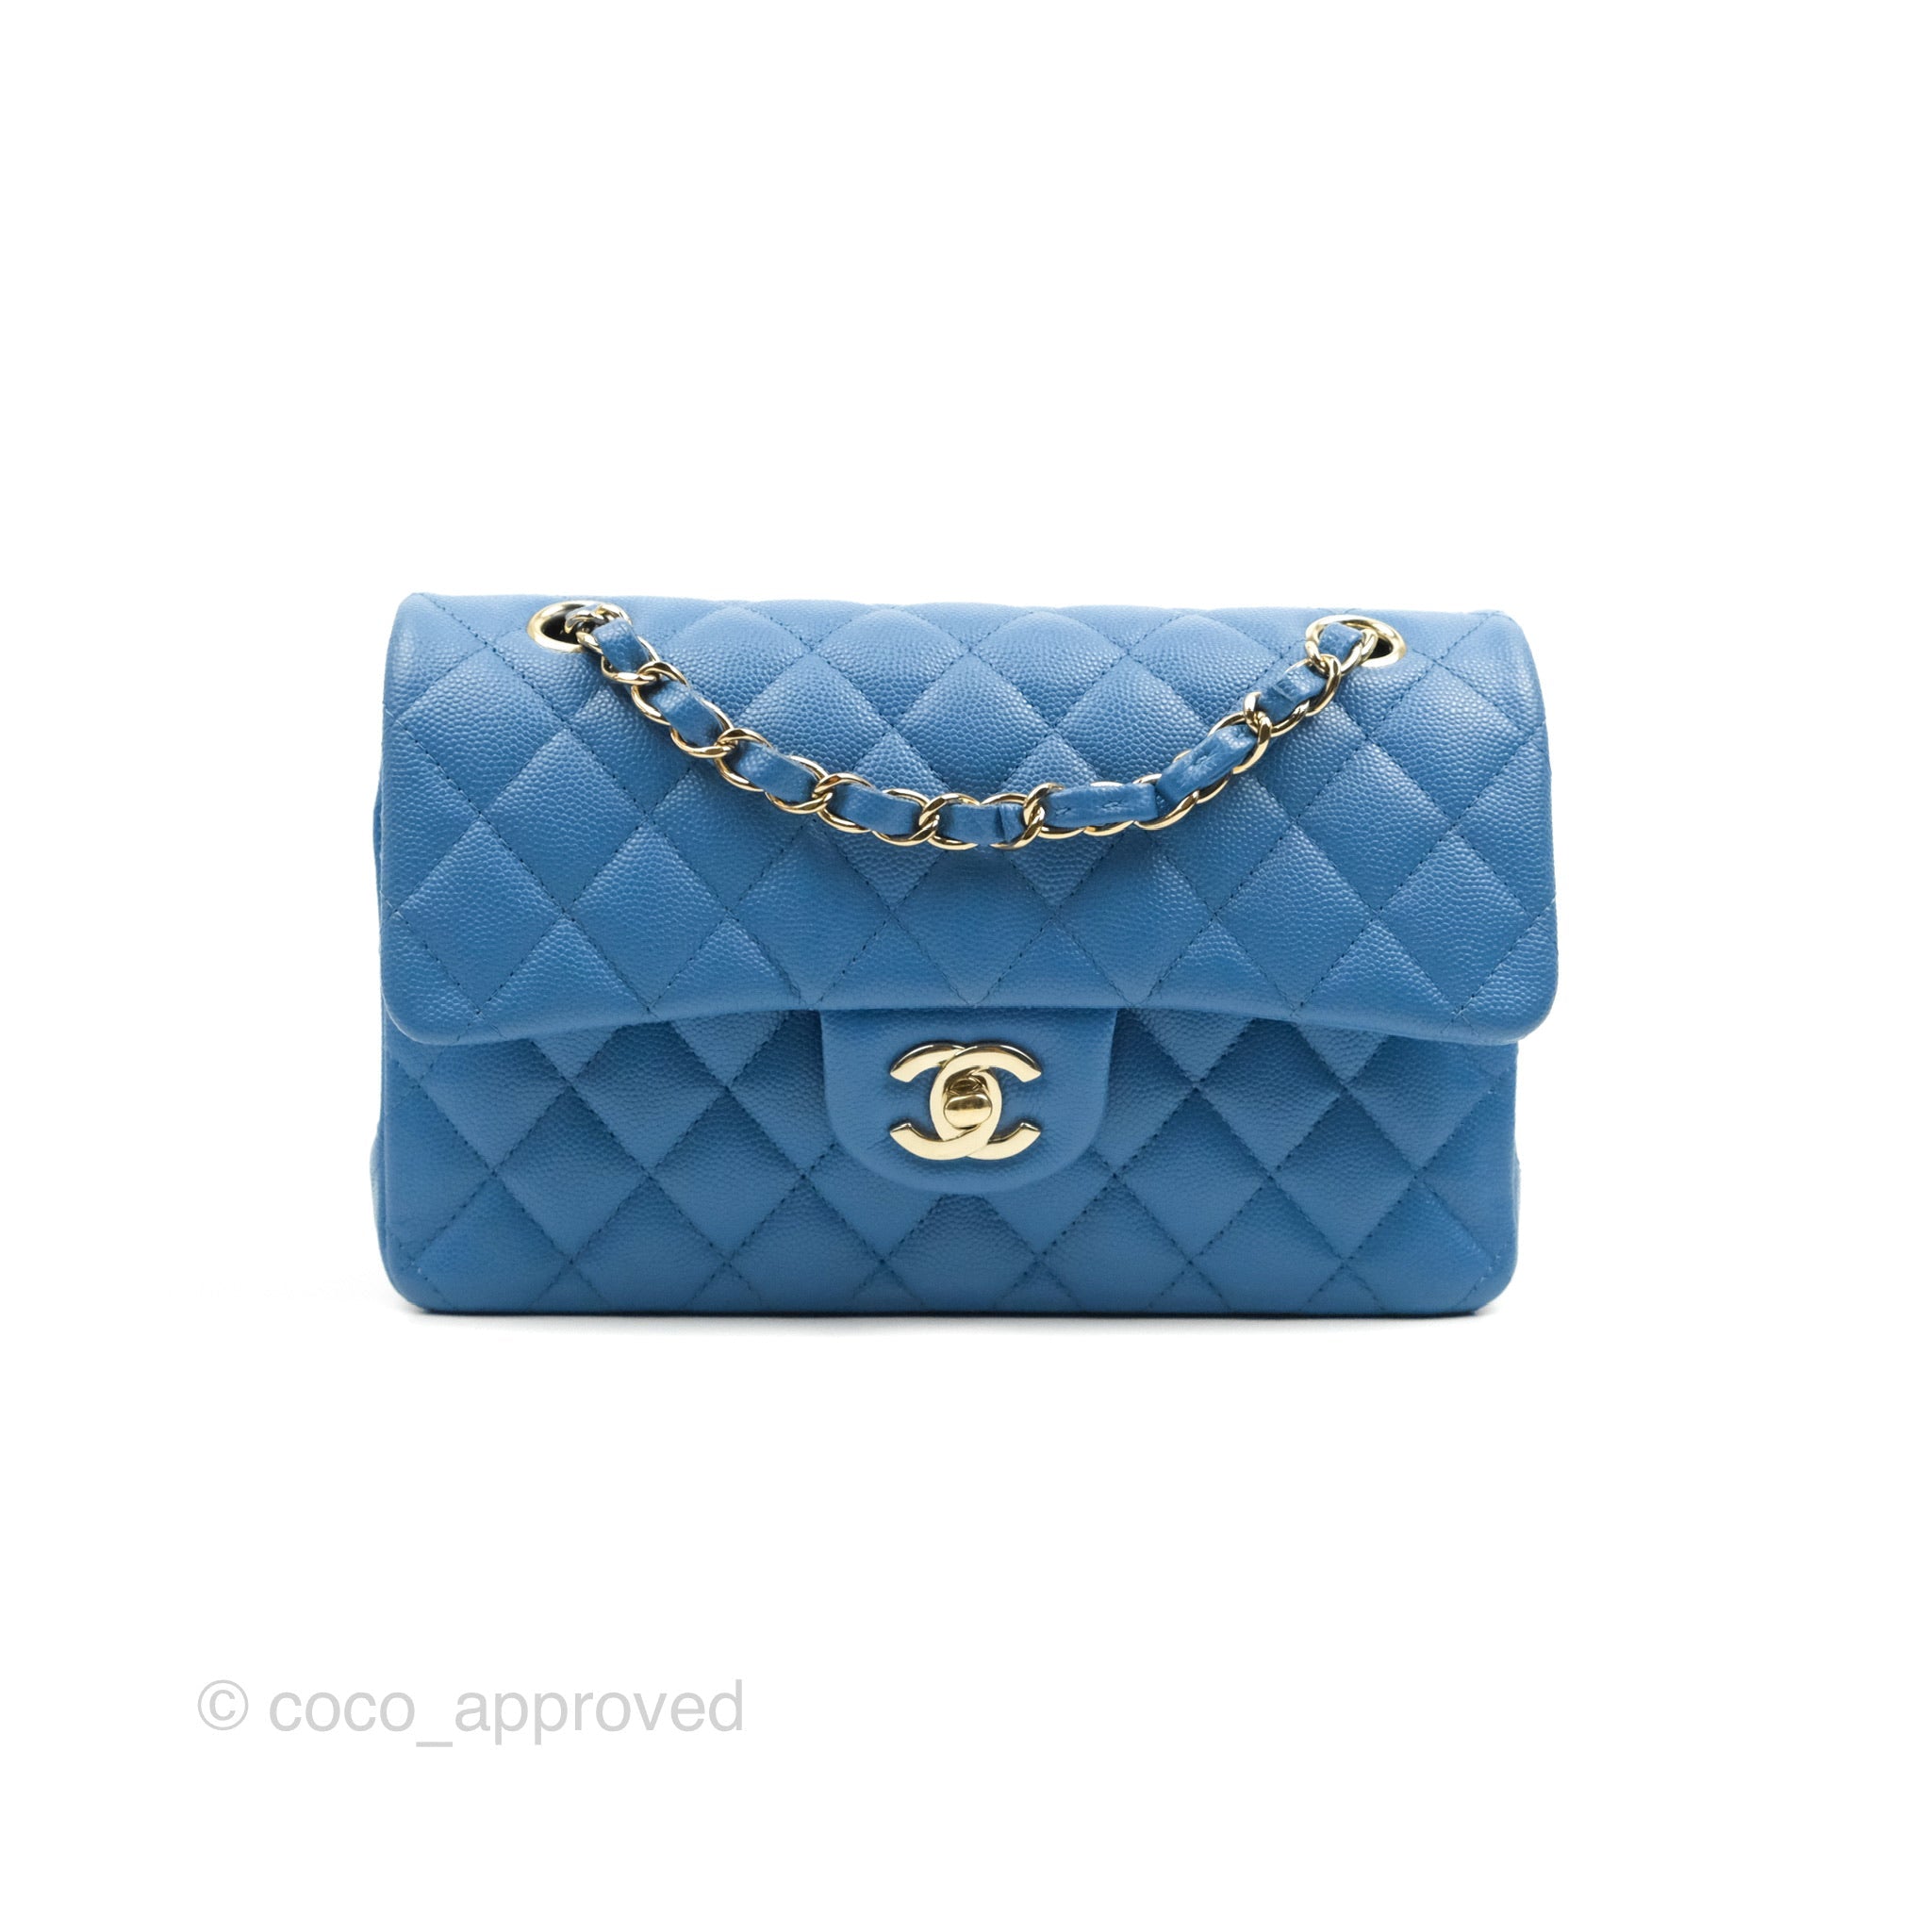 light blue chanel purse